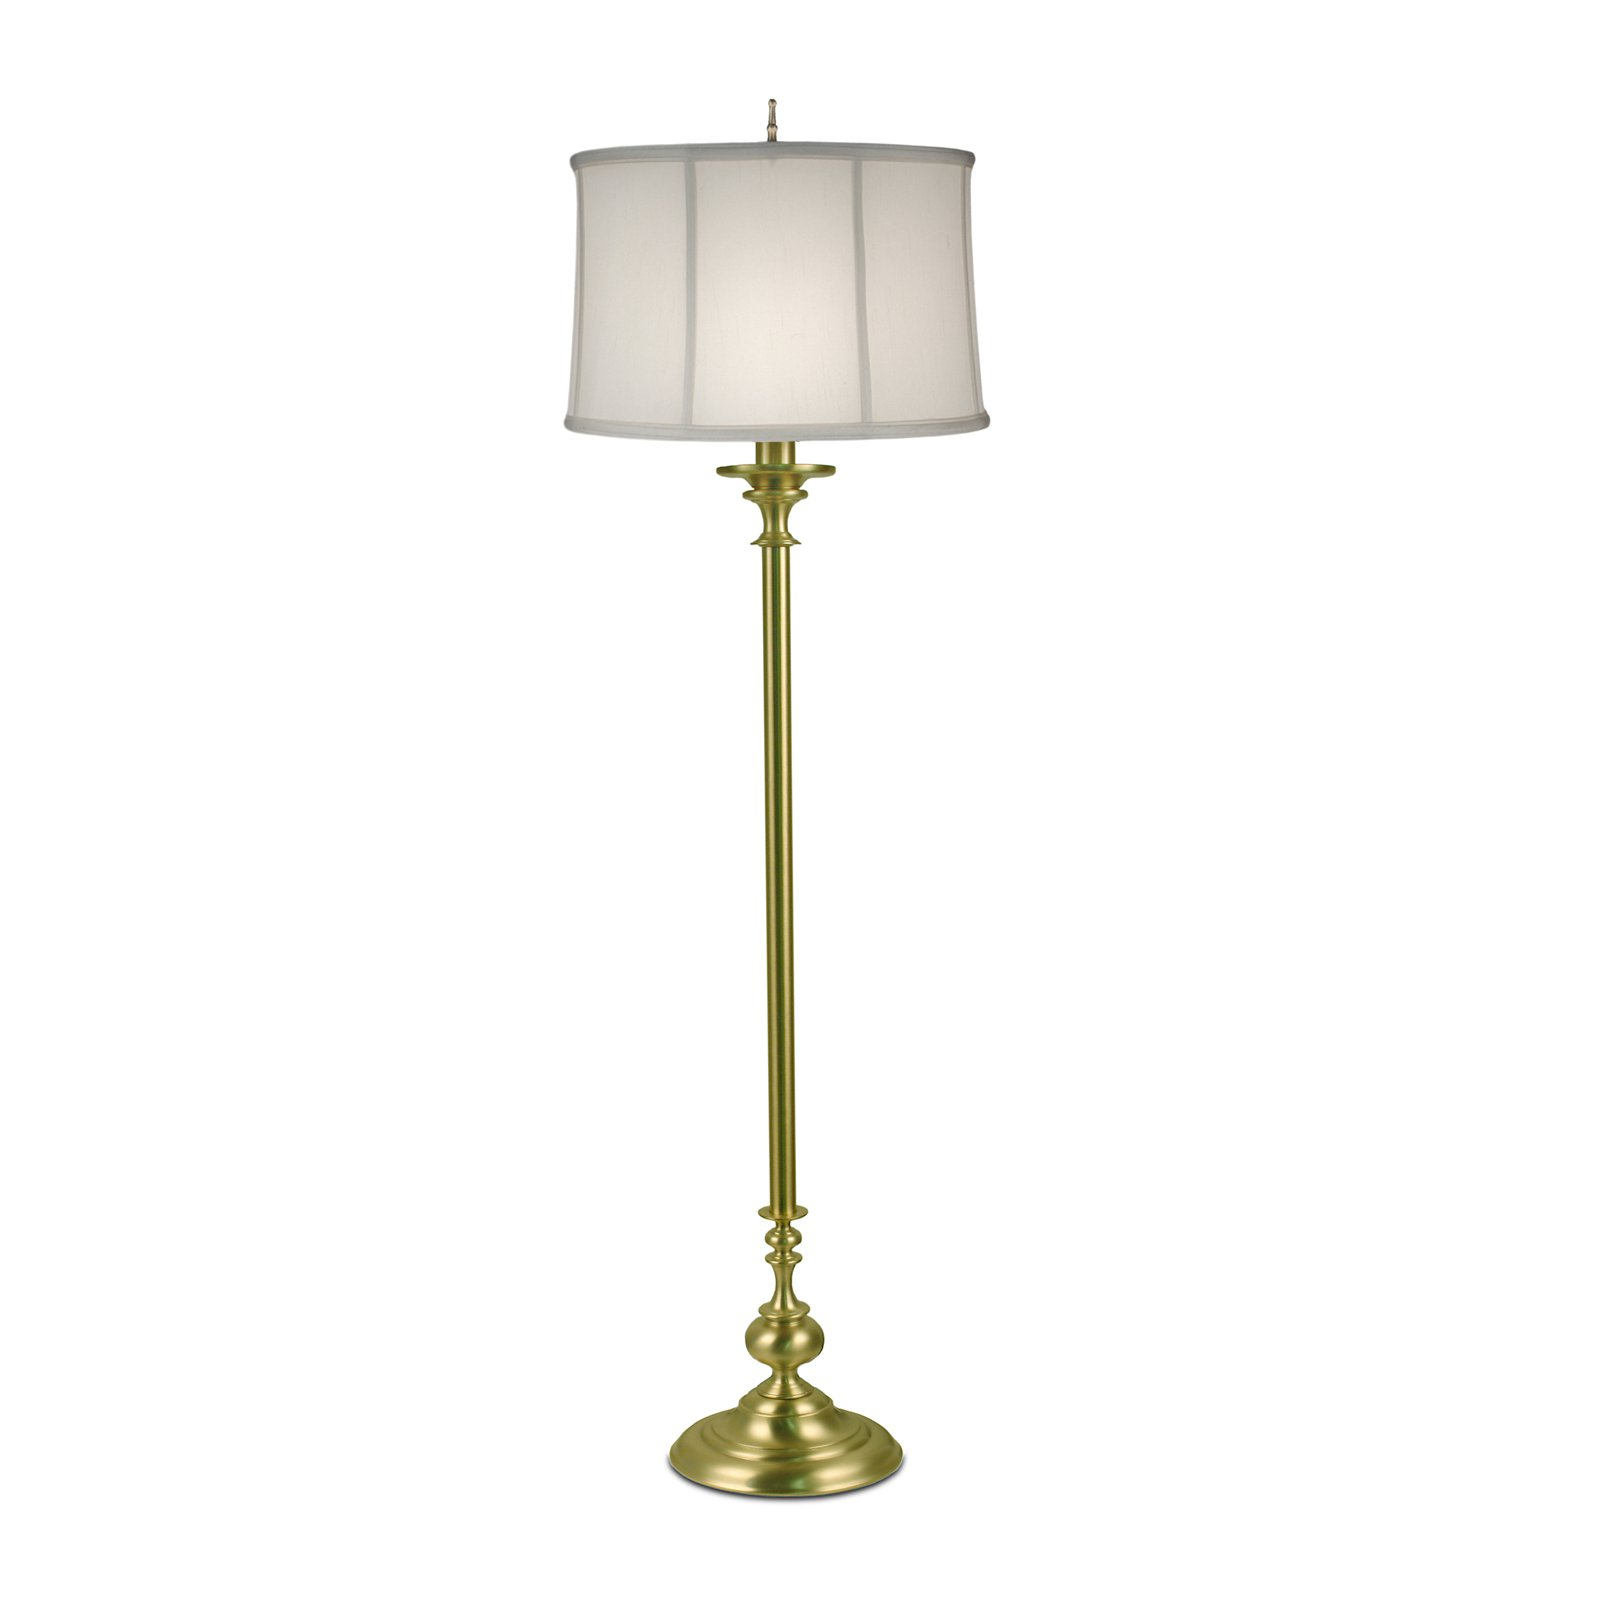 Stiffel 1320 C422 Floor Lamp Satin Brass Floor Lamps Target in dimensions 1600 X 1600